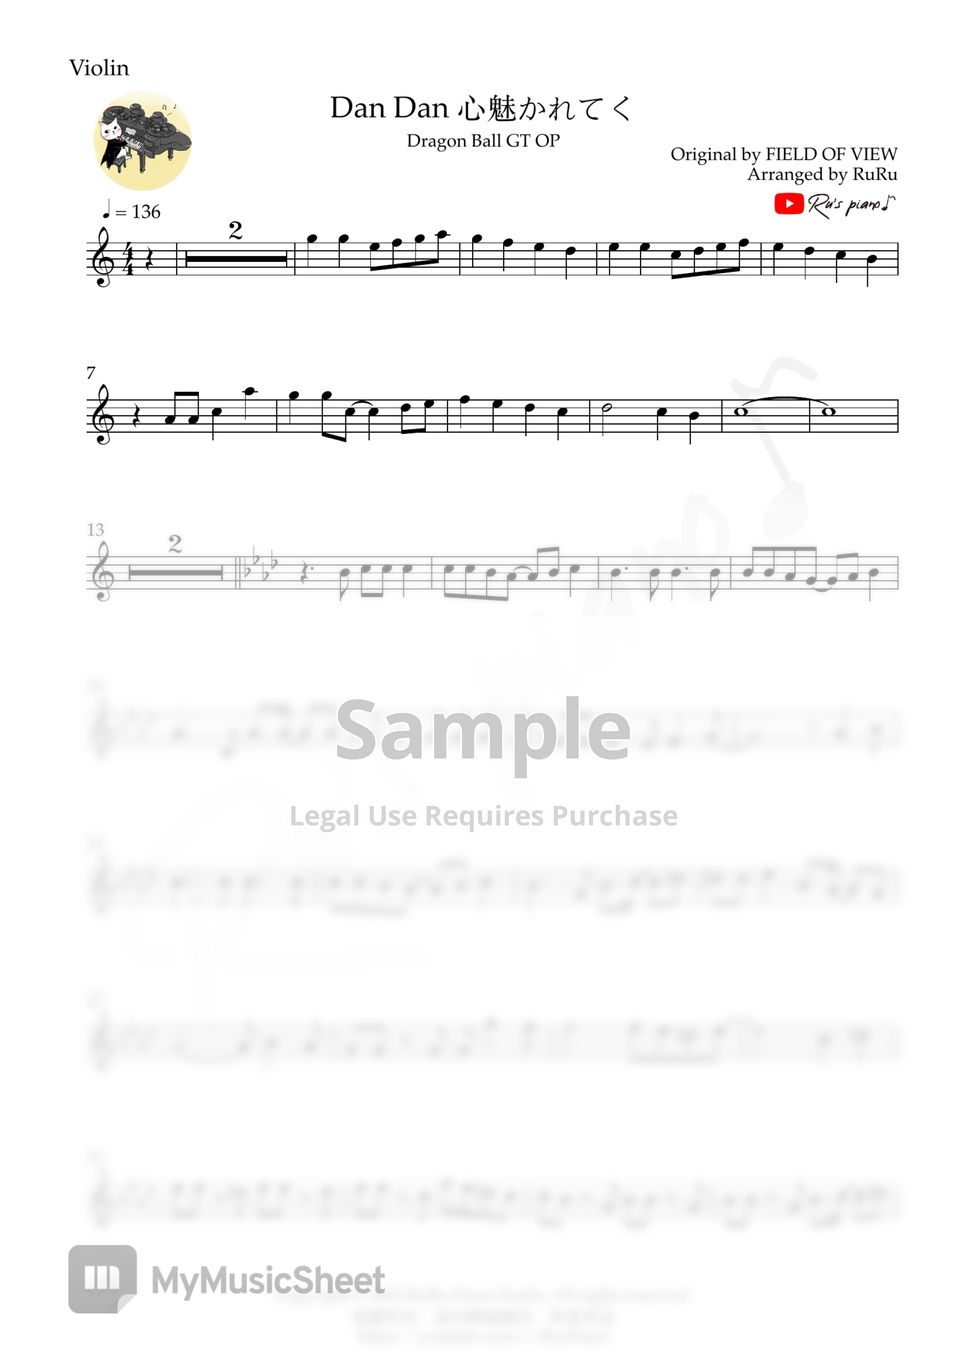 Dan dan kokoro (DBGT theme) Sheet music for Piano, Violin (Solo